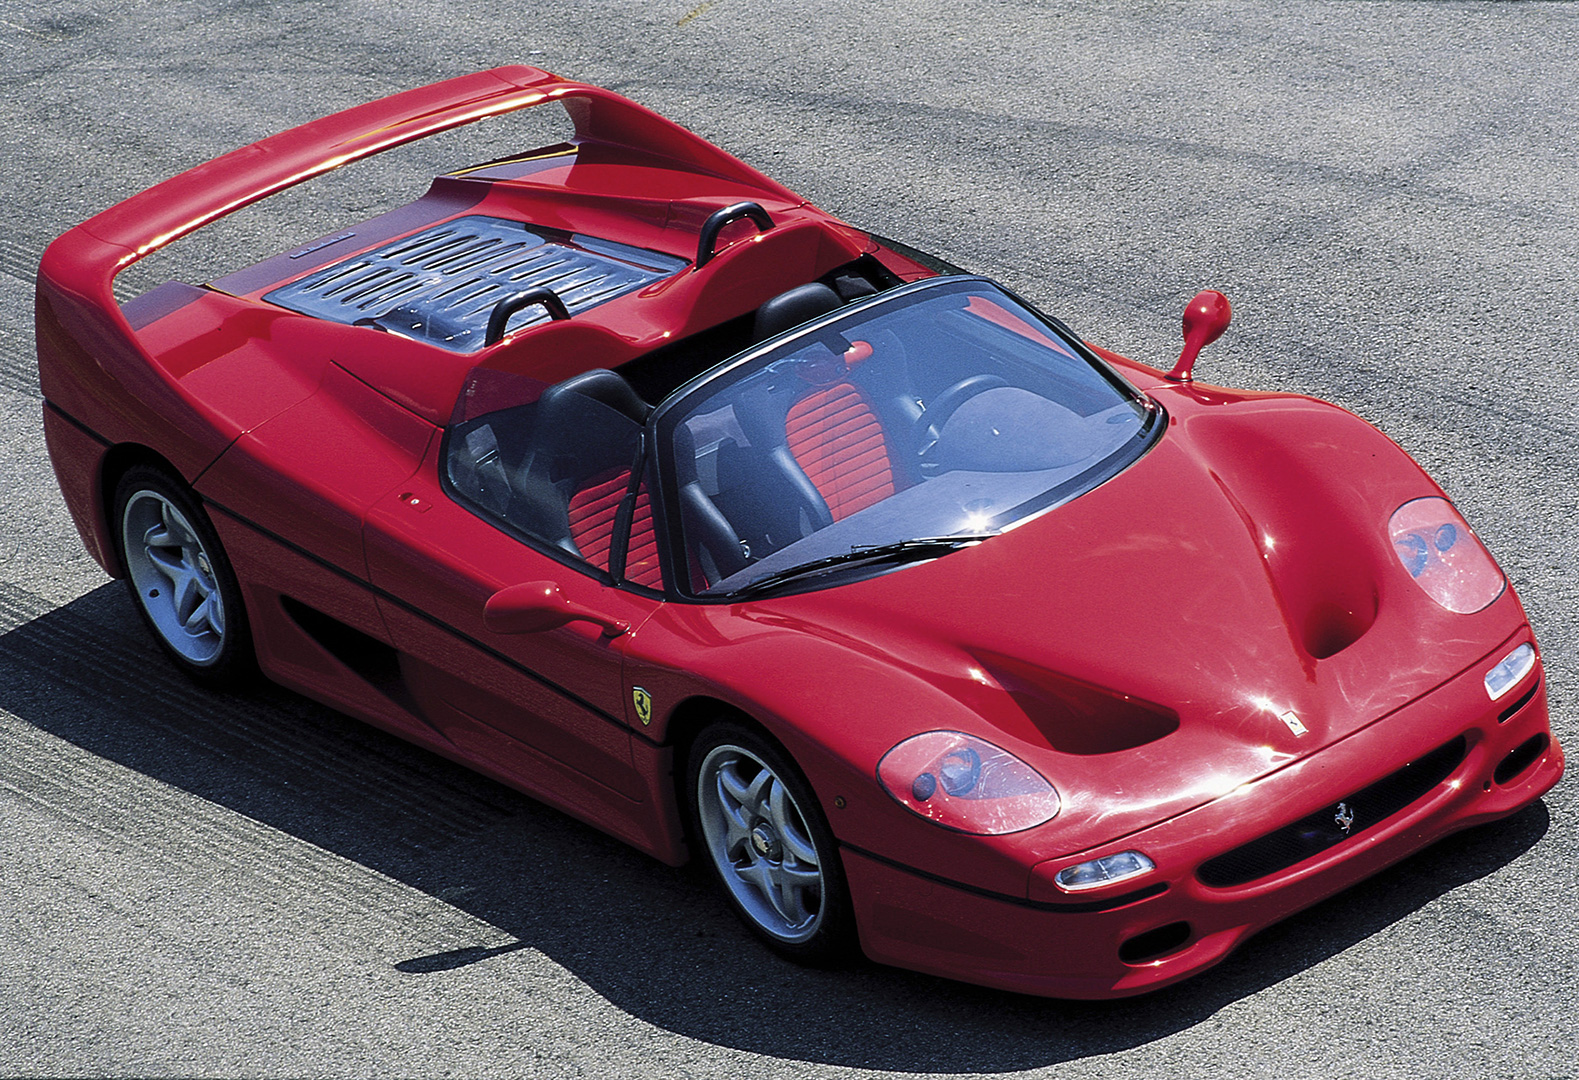 Ferrari F50 technical specifications